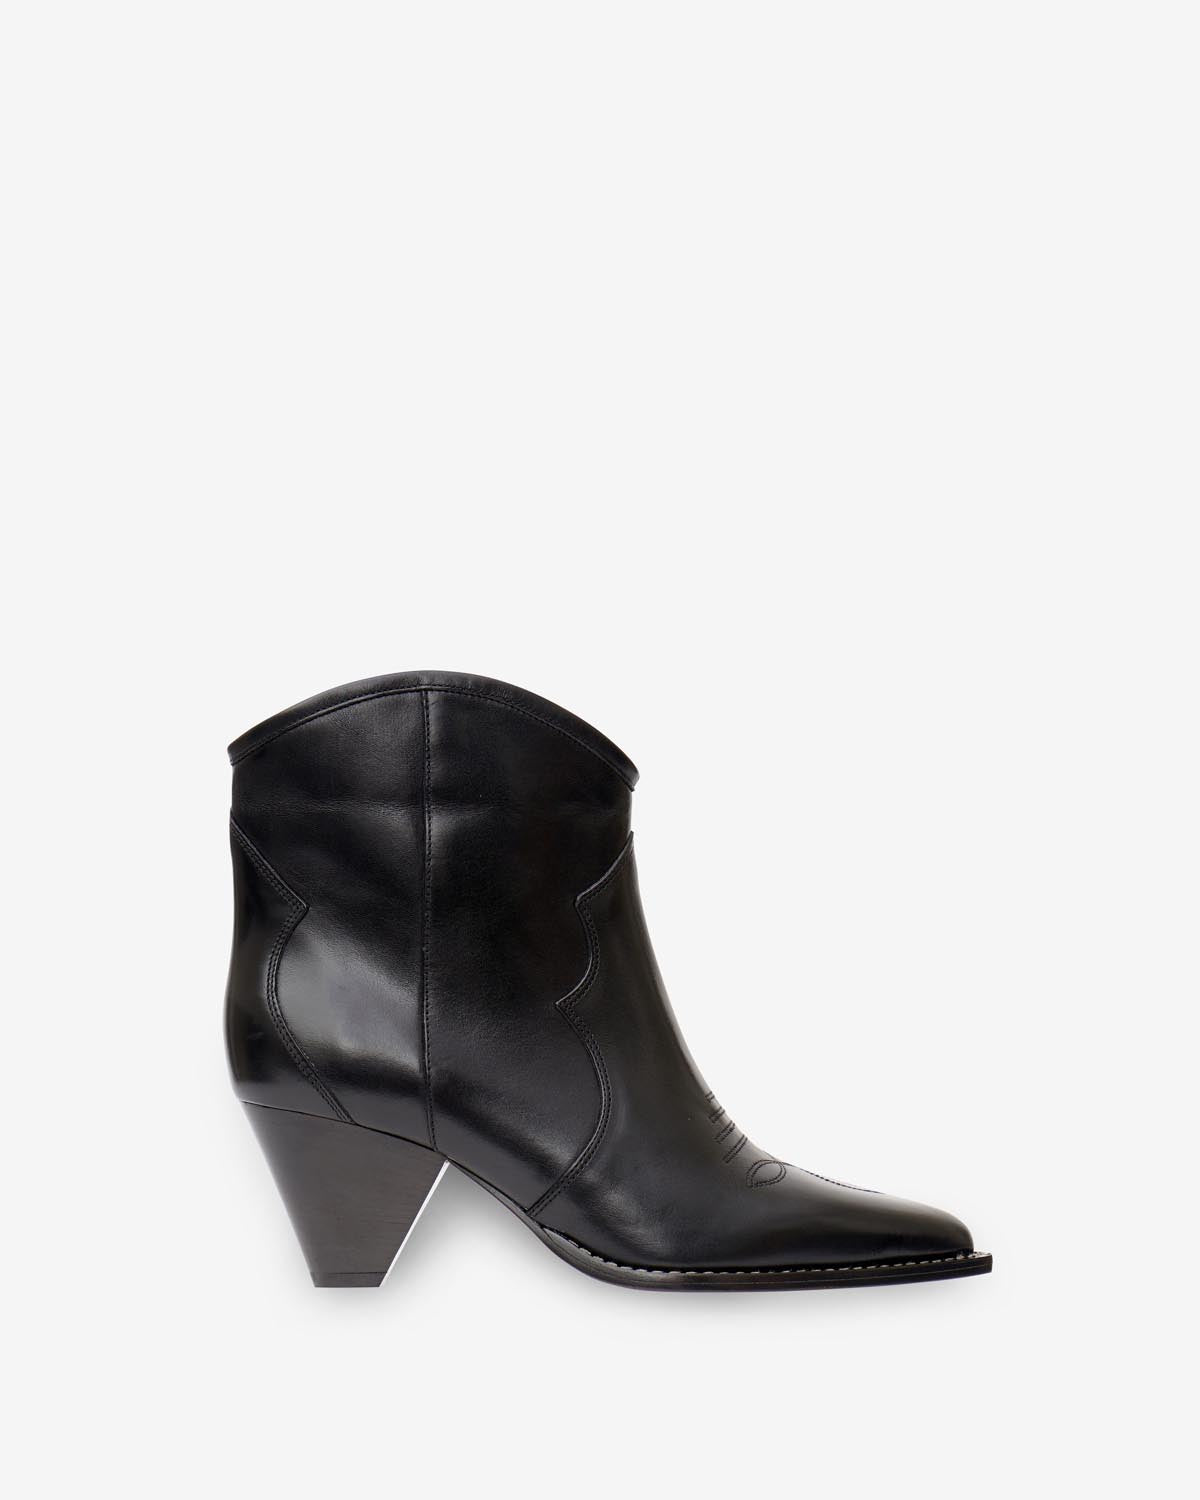 Boots darizo Woman Noir 4